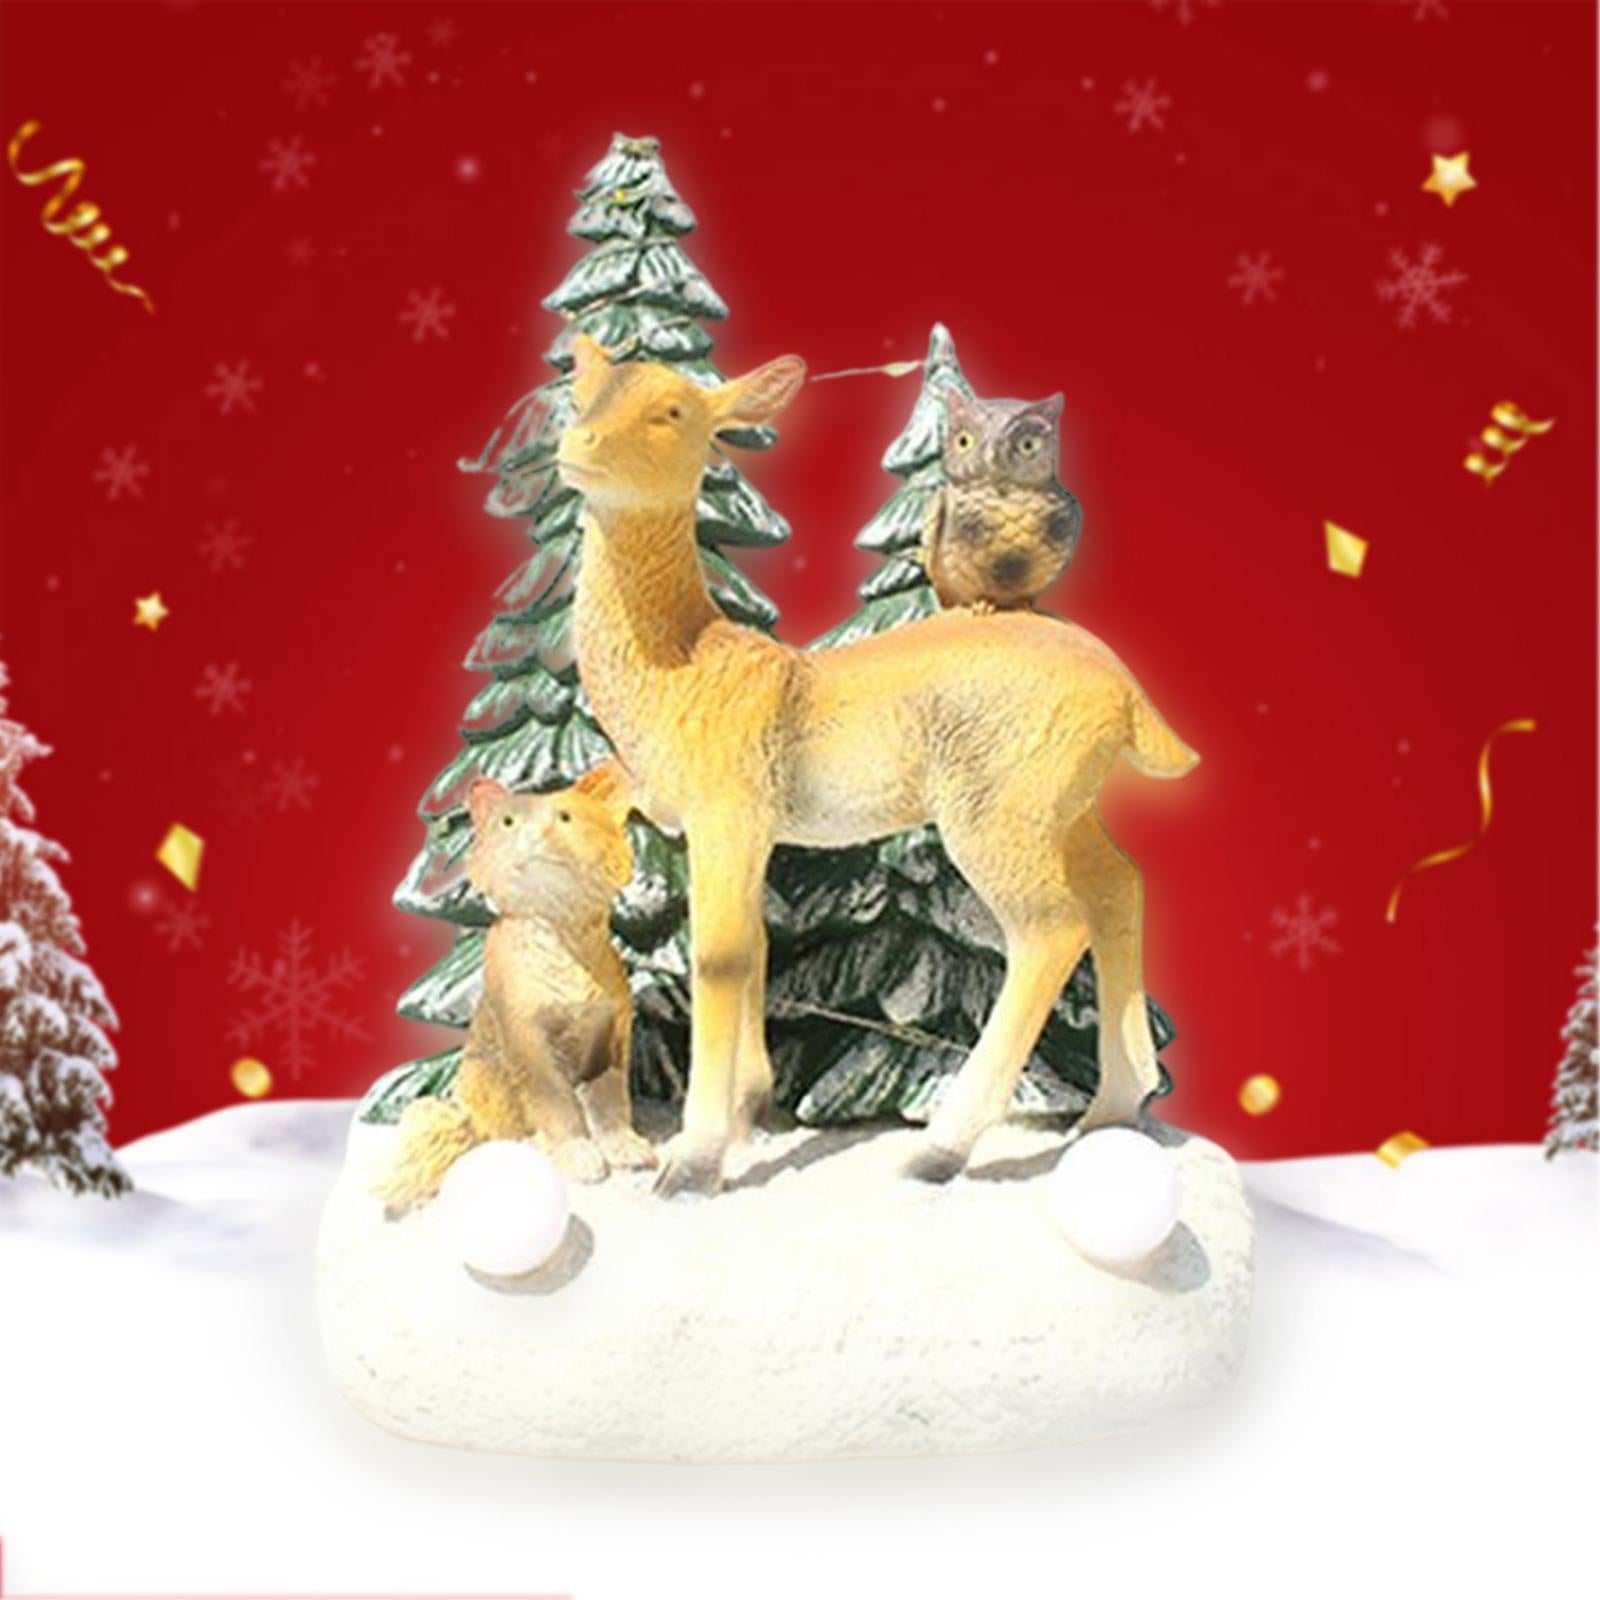 Lighted Christmas Miniature Figurines Toys DIY Accessories Doll House Decor Reindeer